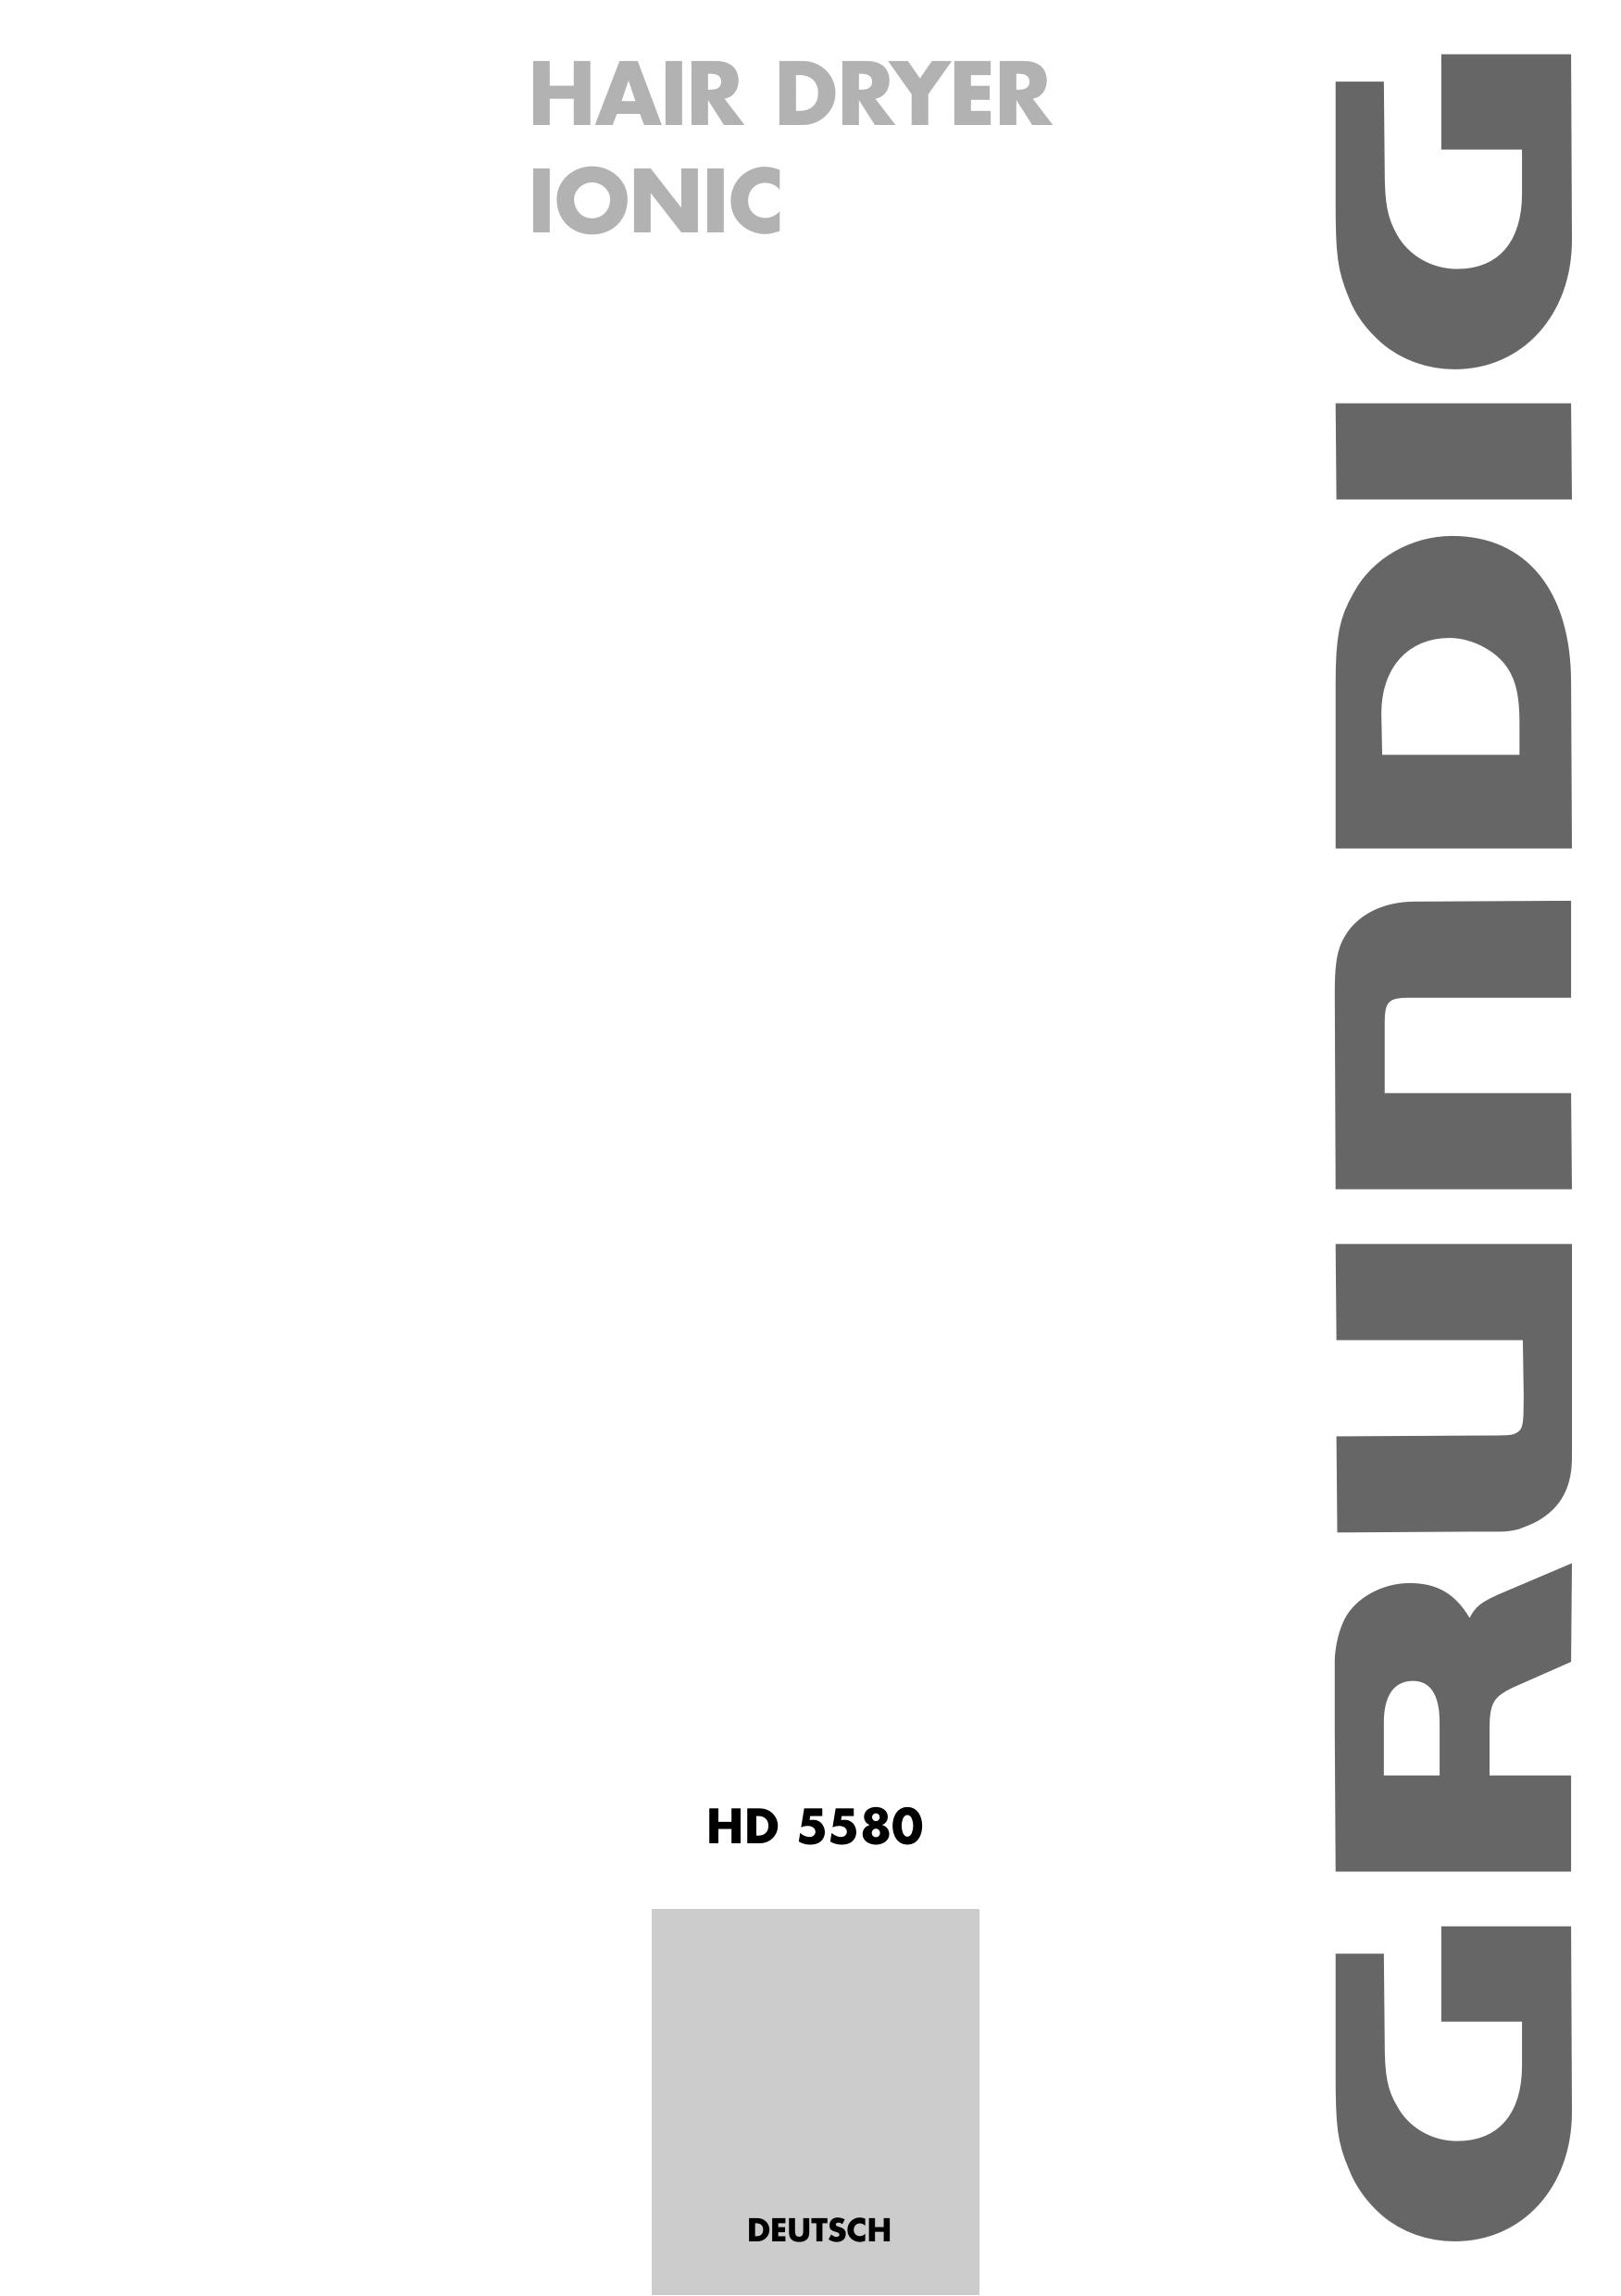 Grundig HD 5580 Hair Dryer User Manual